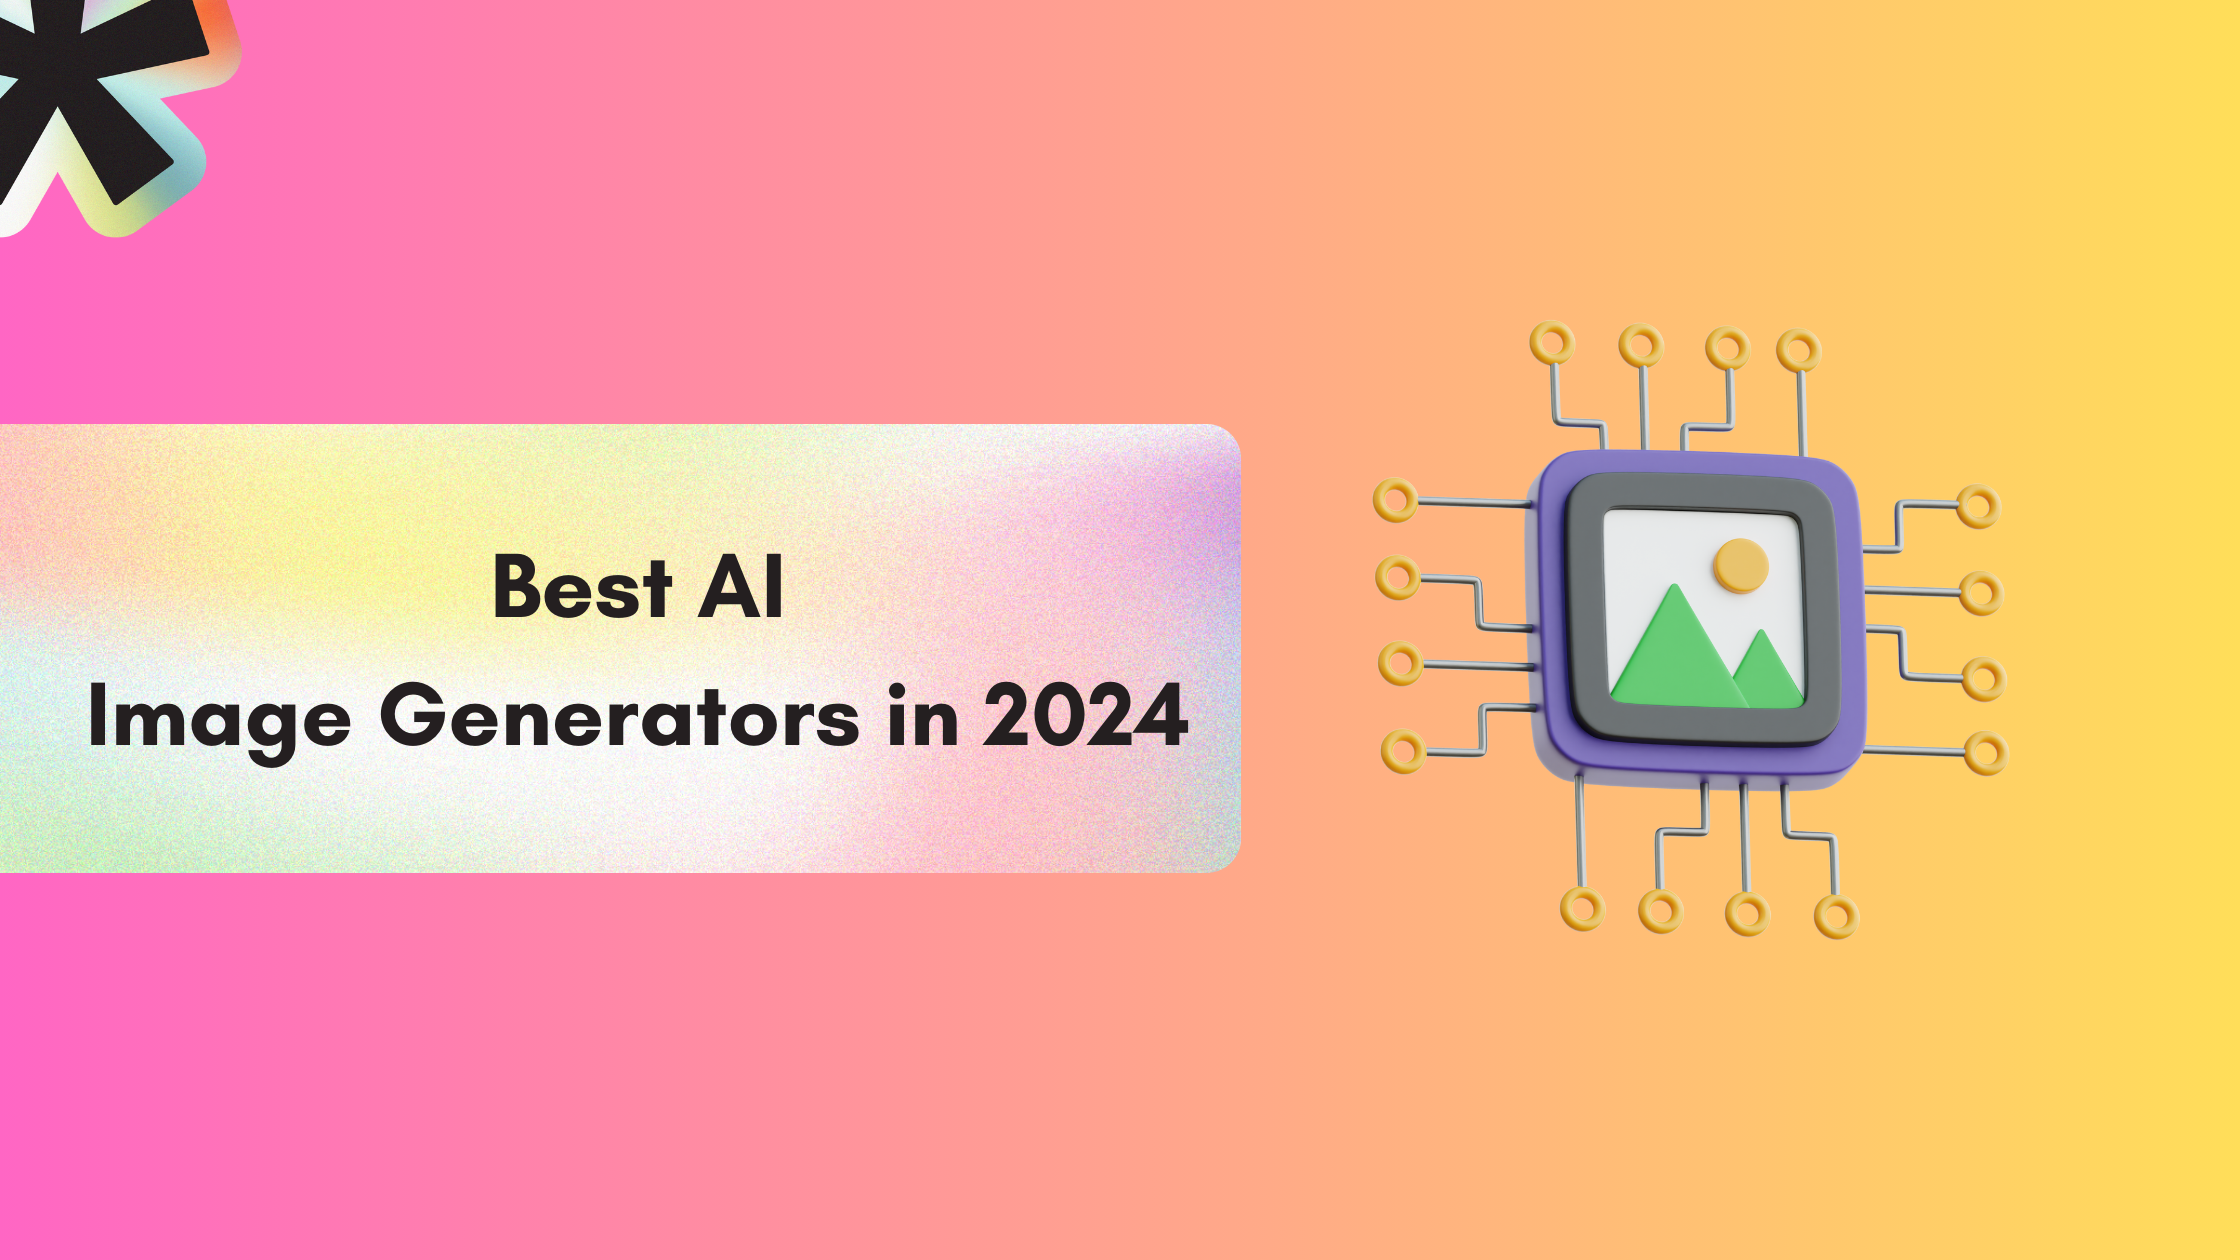 The Best AI Image Generators in 2024